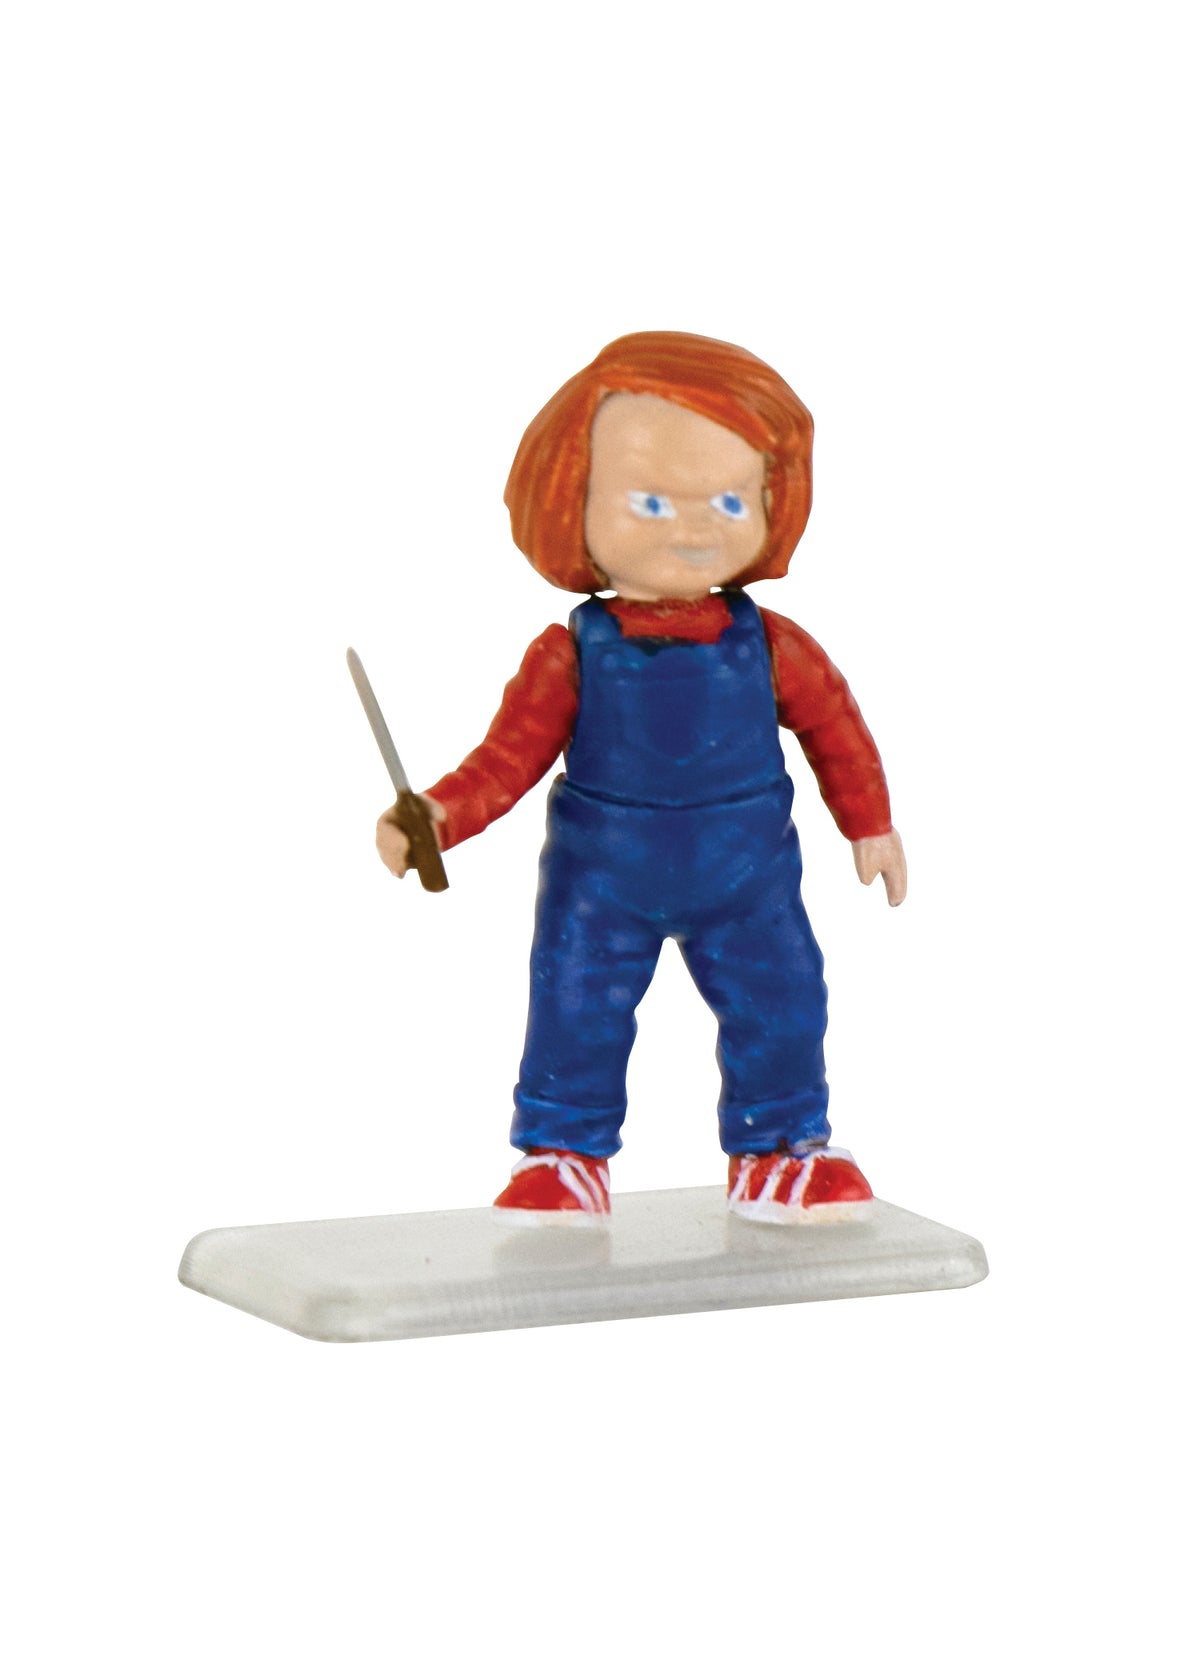 World's Smallest Universal Studios Horror Chucky Micro Action Figure